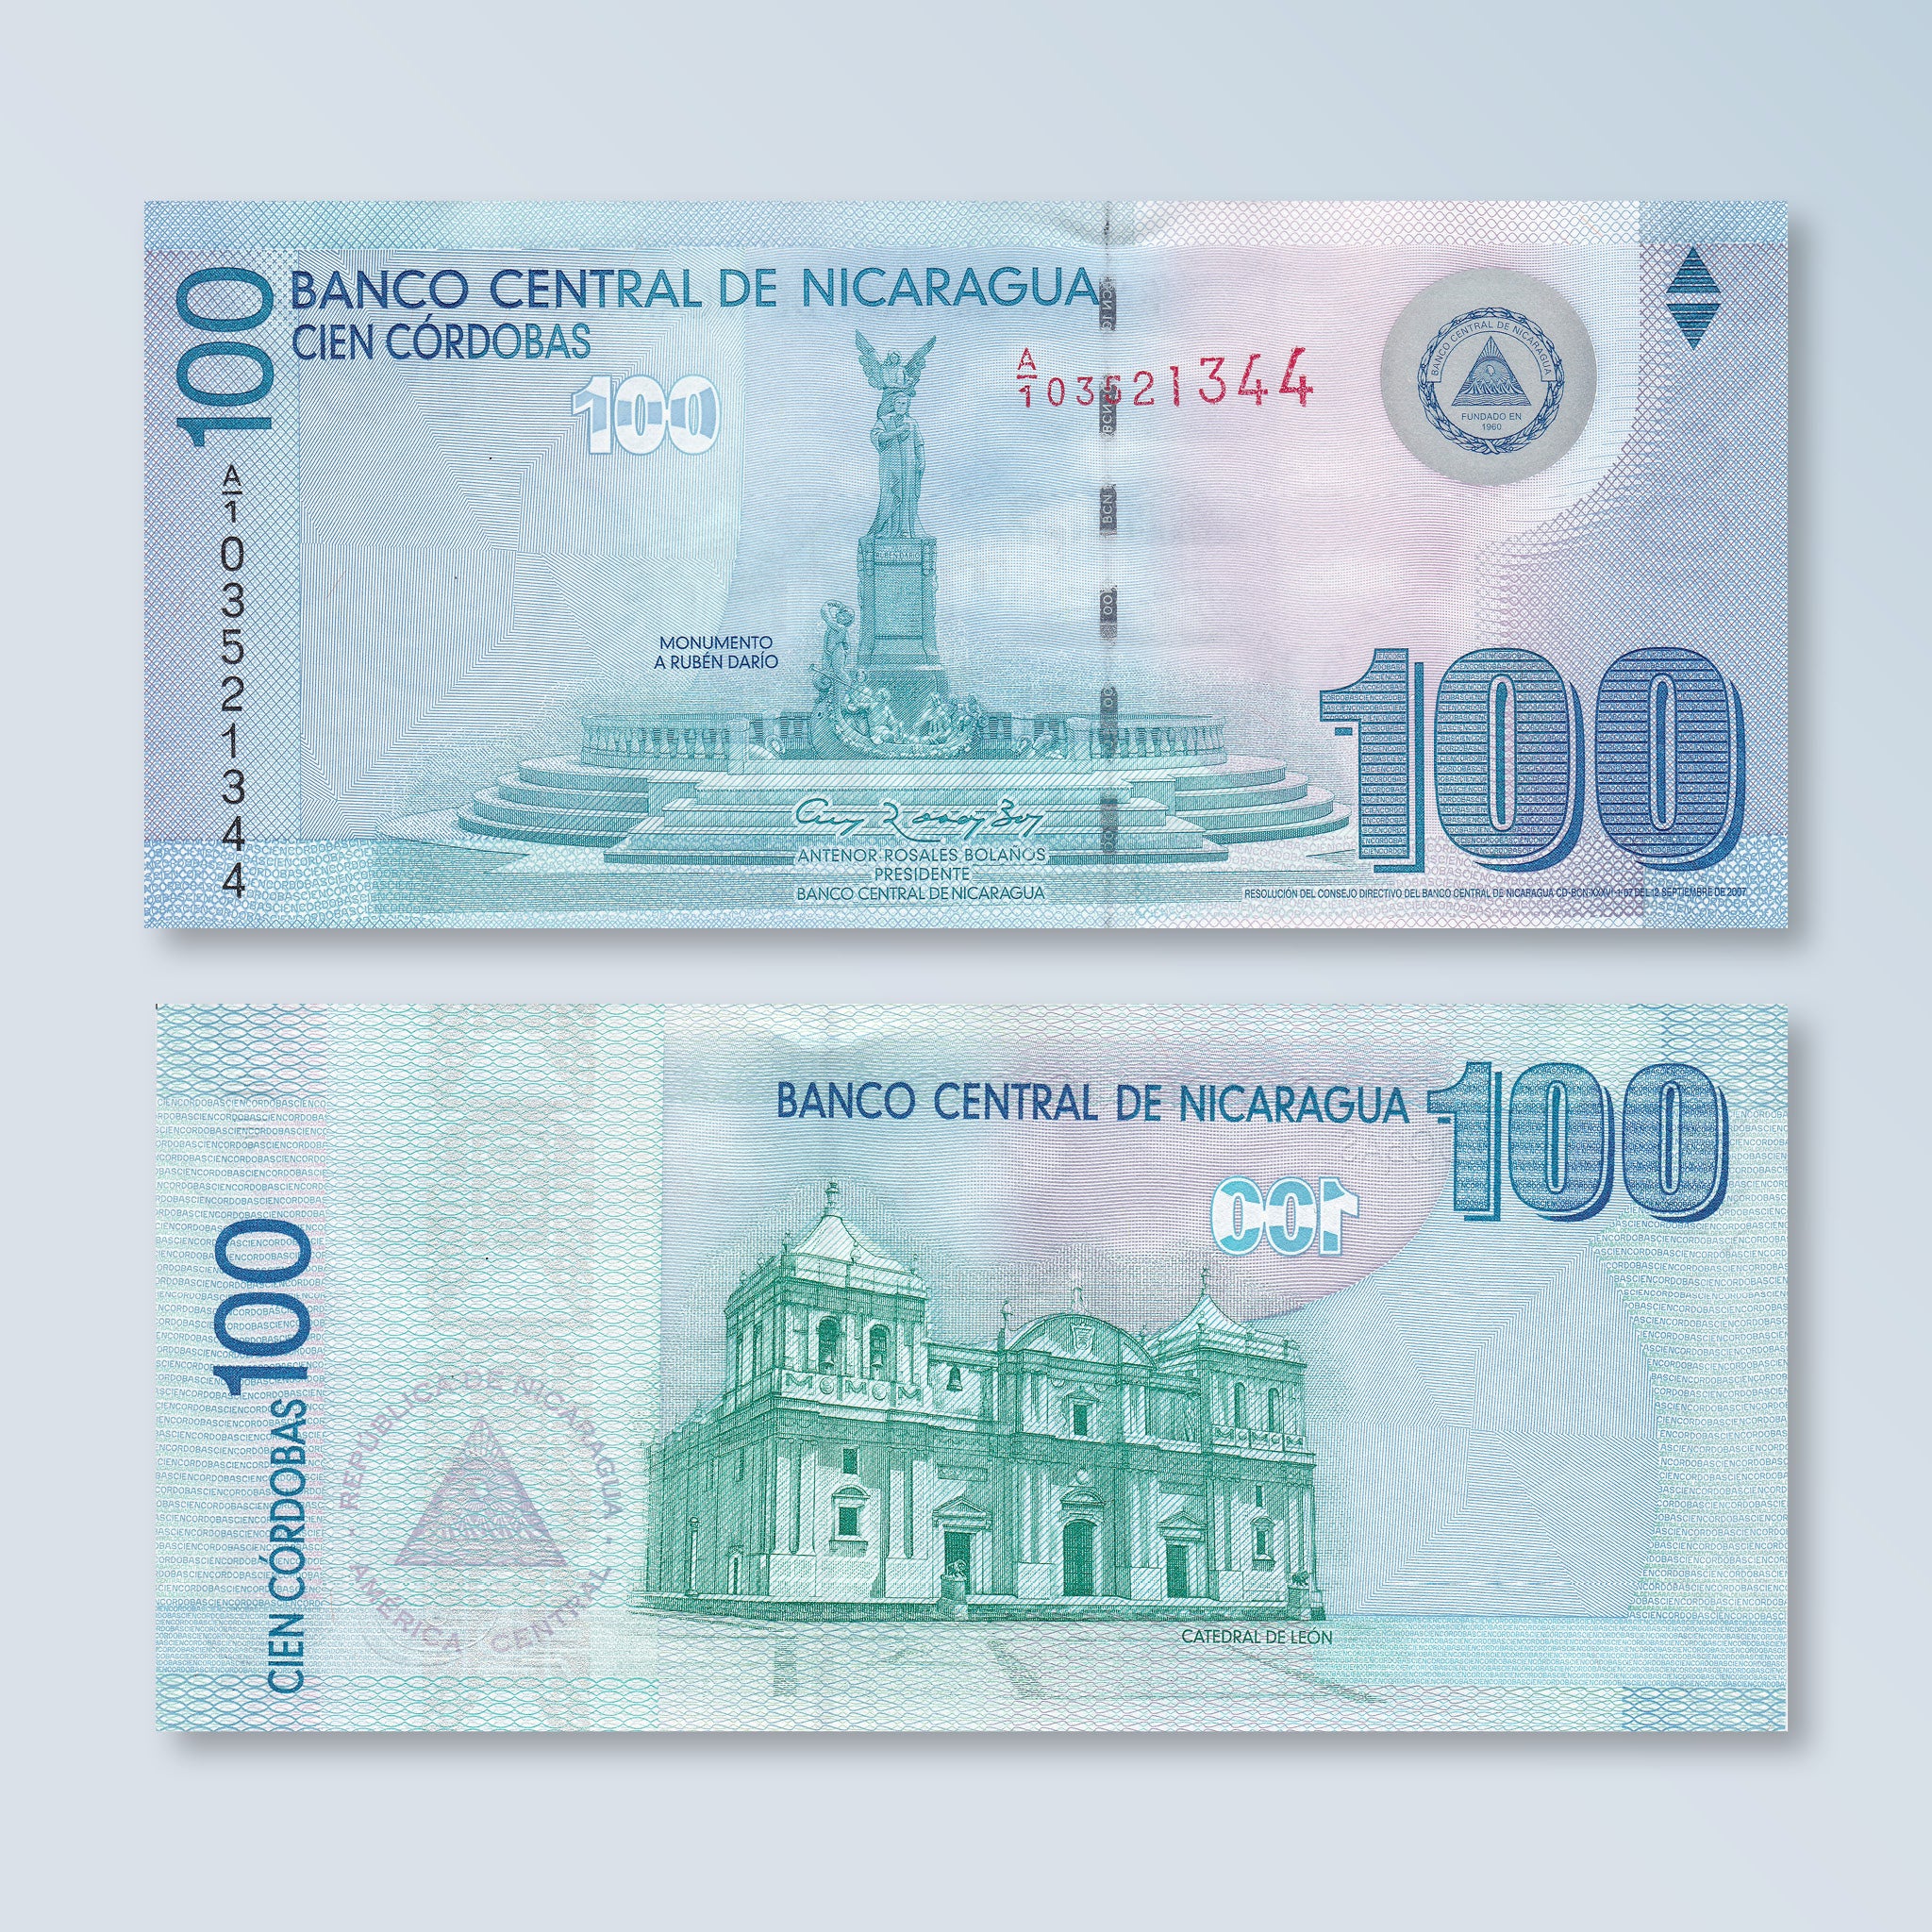 Nicaragua 100 Córdobas, 2007, B500a, P204a, UNC - Robert's World Money - World Banknotes